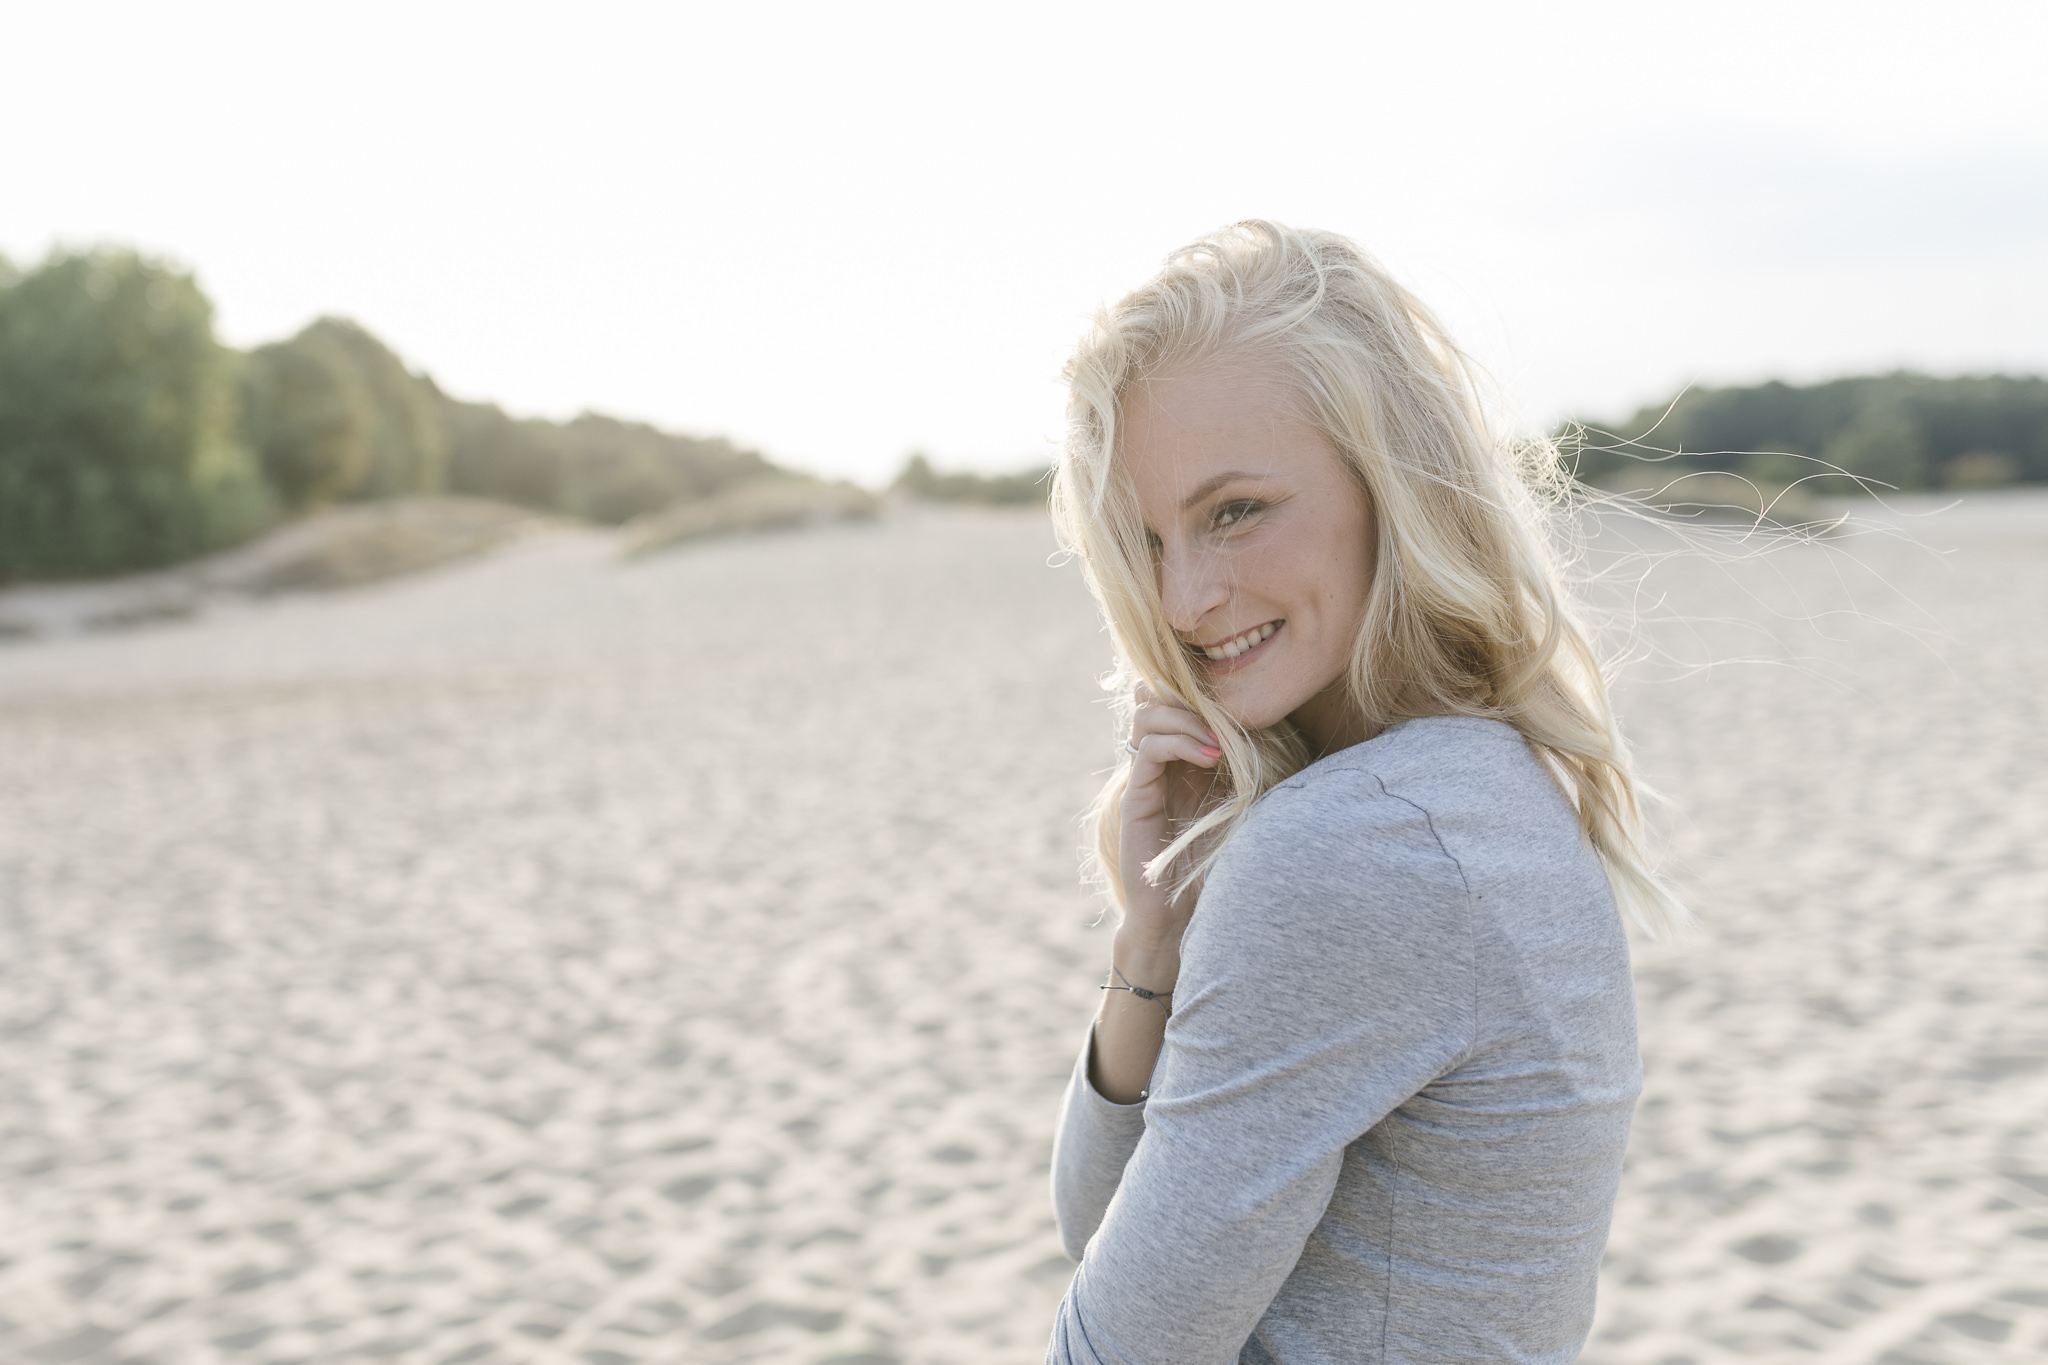 Portraitfotos - Close-Up einer jungen Frau am Strand